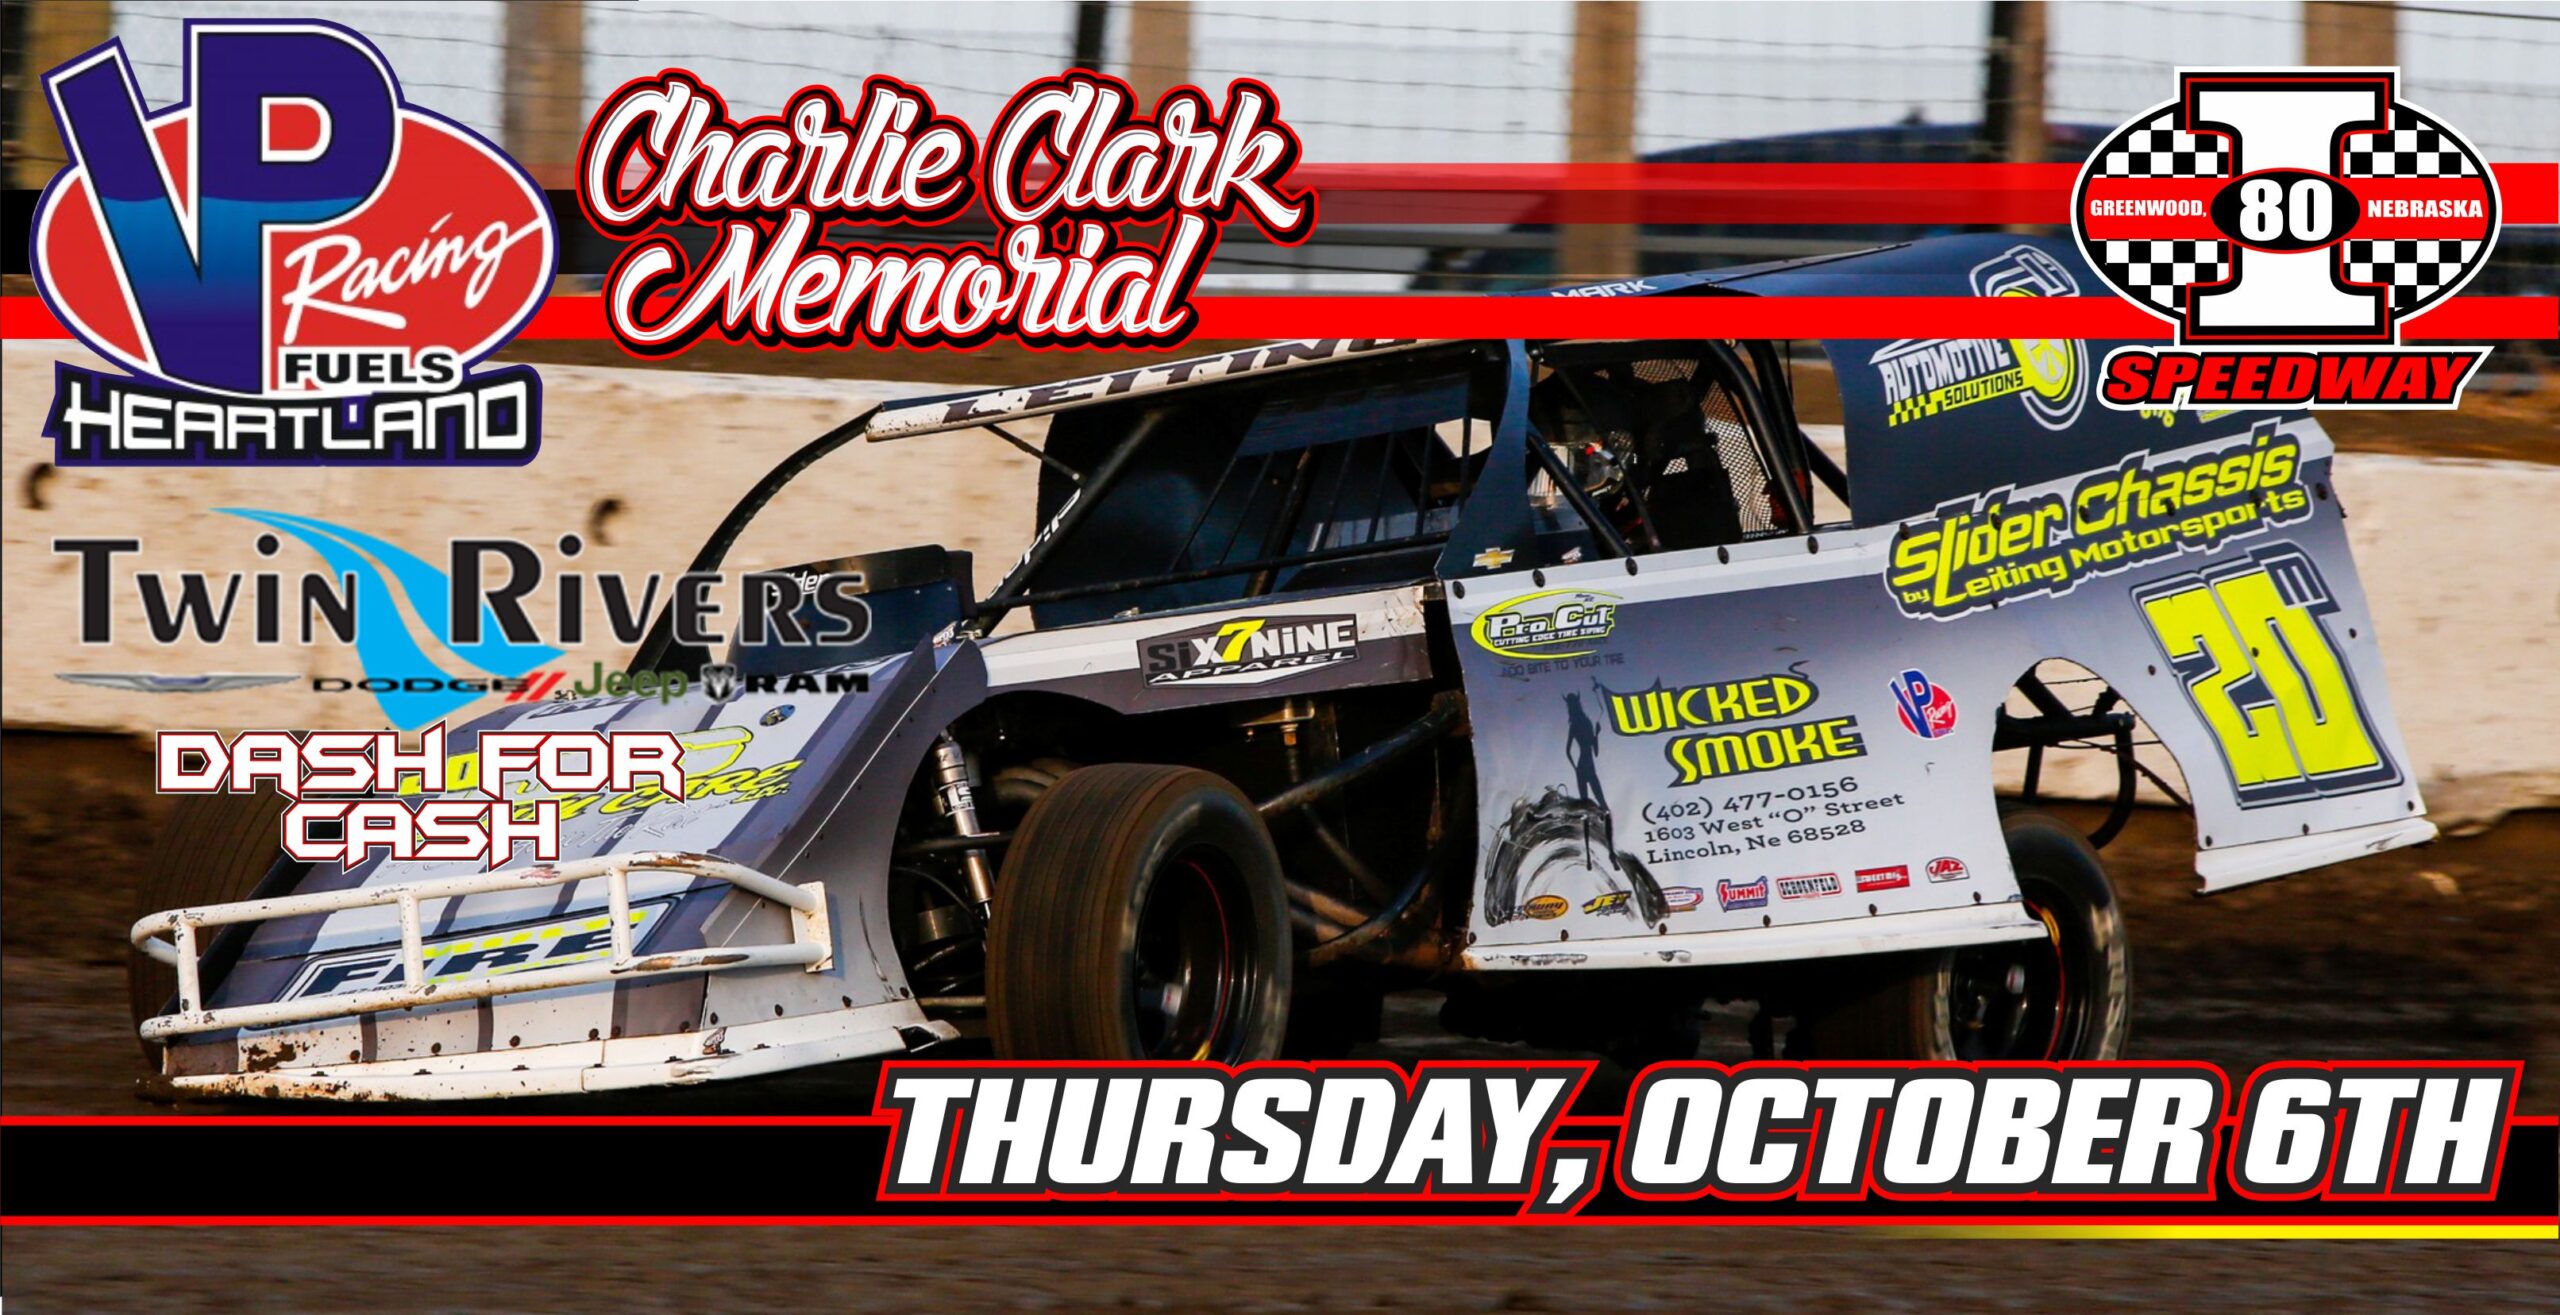 CHARLIE CLARK MEMORIAL ADDED OCTOBER 6TH – I-80 Speedway